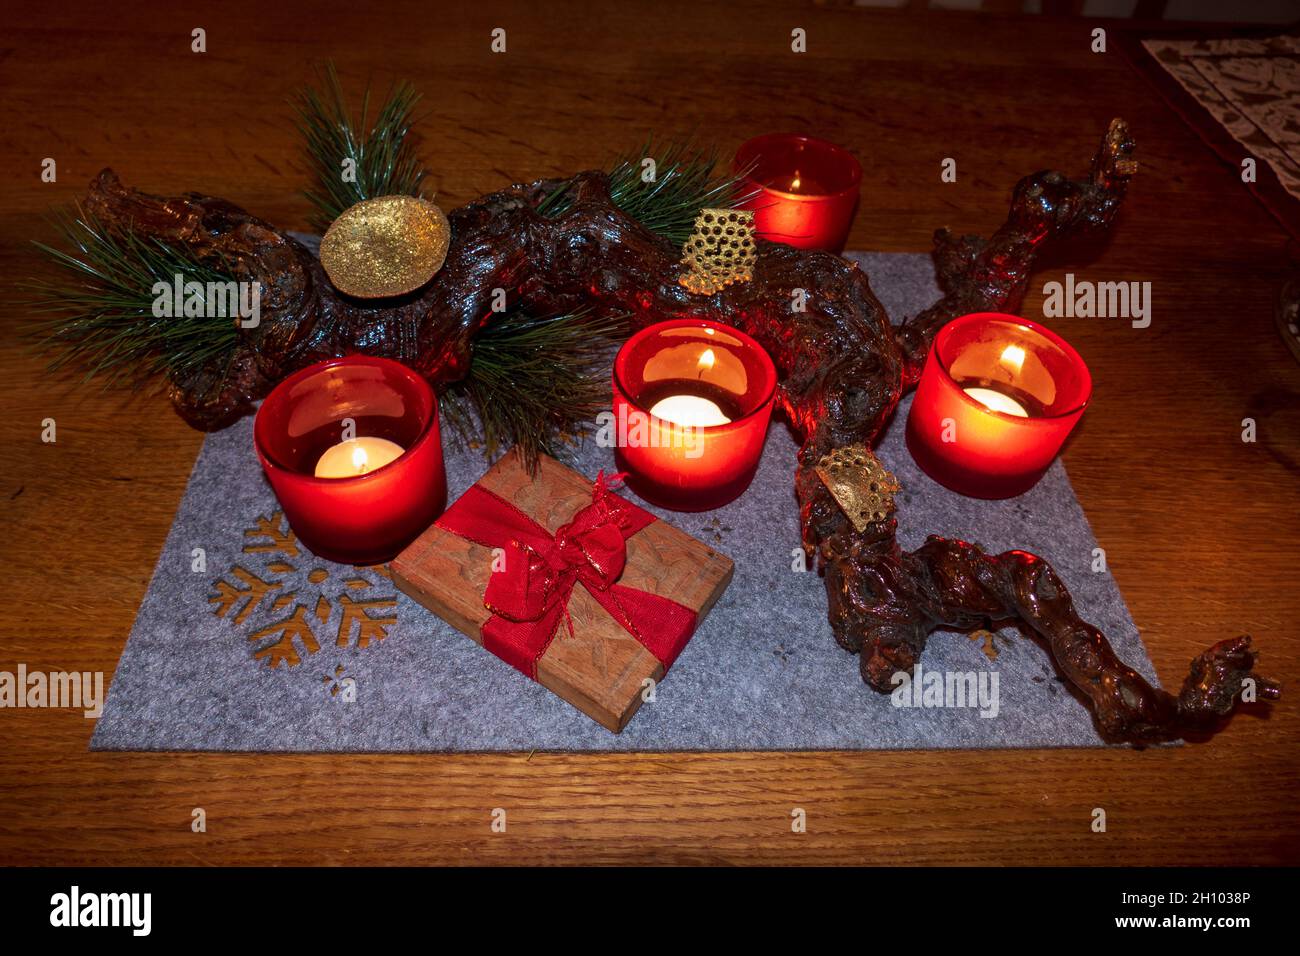 Rebwurzel, Model und Kerzen zum Adventsgesteck dekoriert Foto Stock